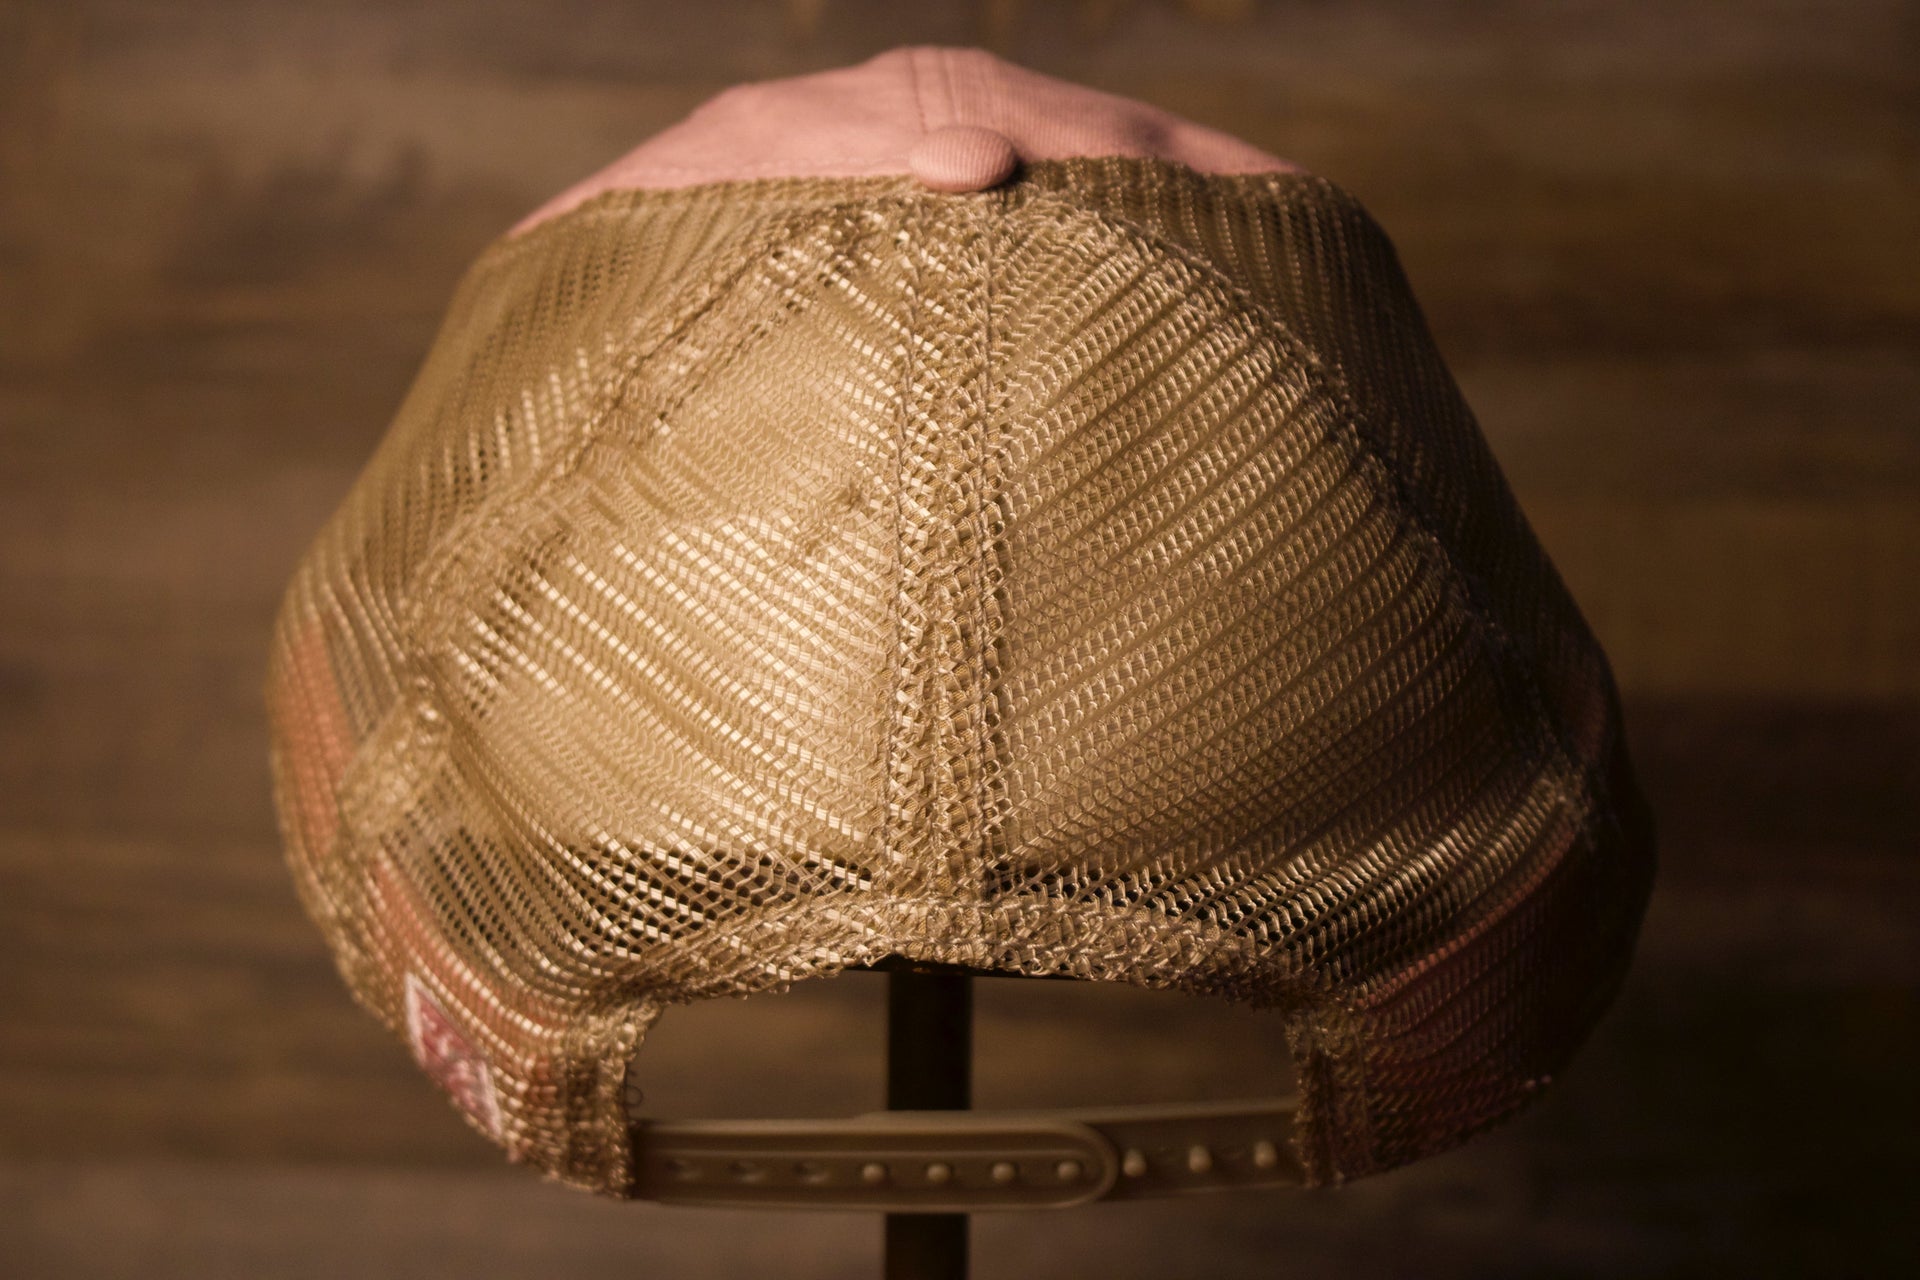 Ocean city Trucker hat Pink khaki | ocnj trucker hat pink womens hat this hat is a trucker hat with a snap back